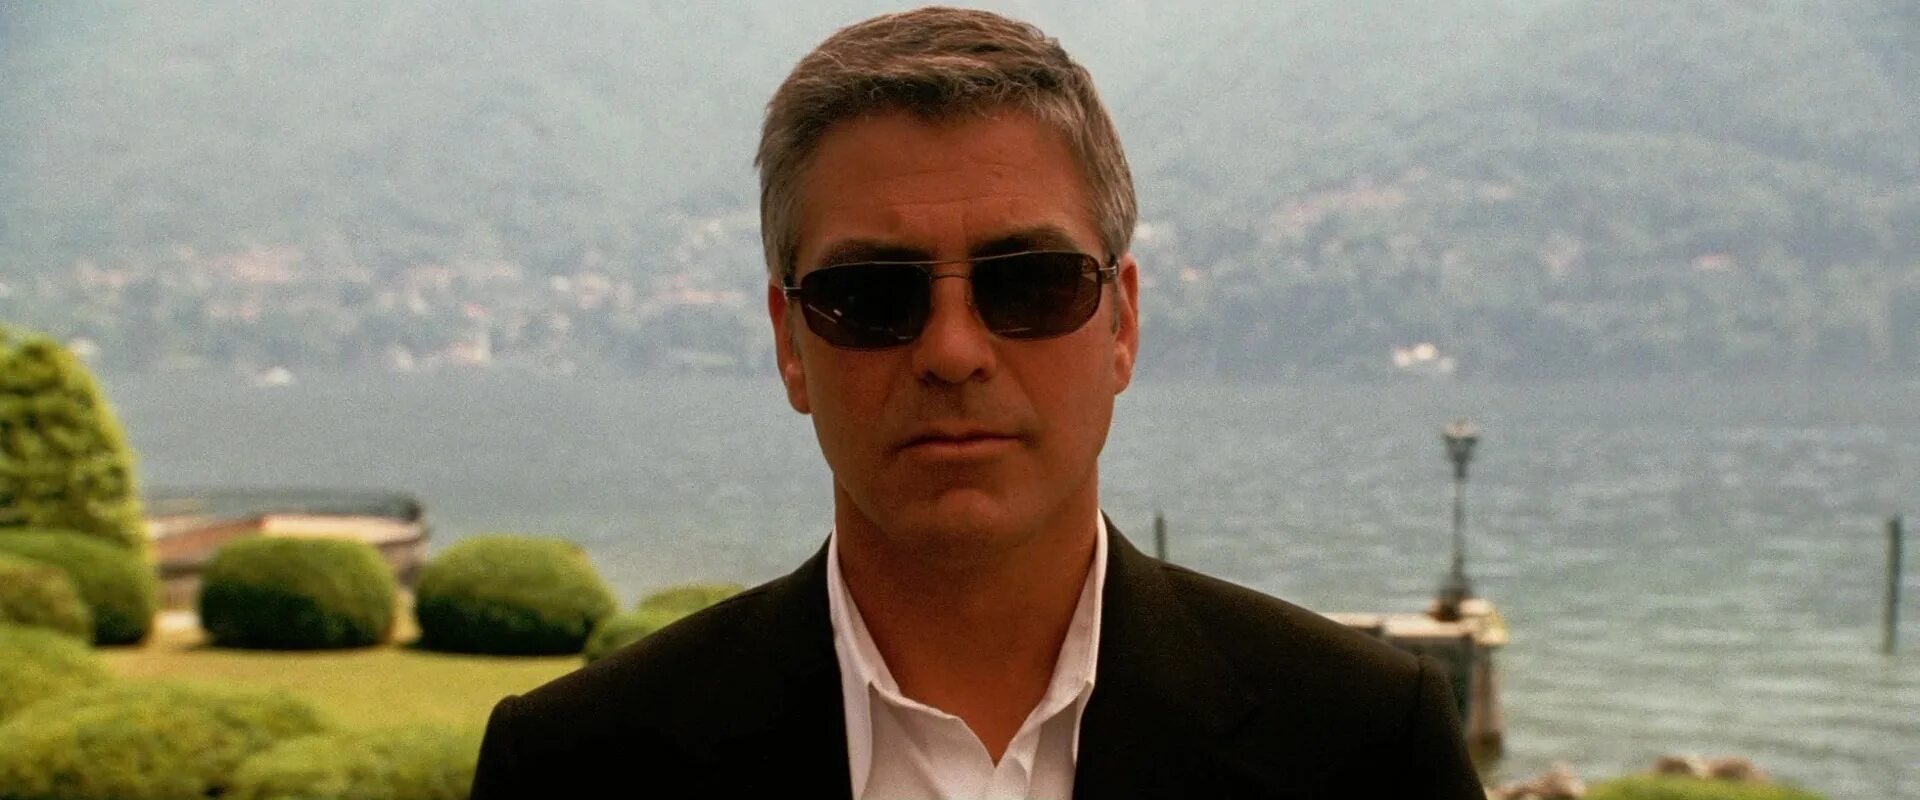 13 друзей оушена 1080. Джордж Клуни 12 друзей Оушена. Джордж Клуни 13 друзей Оушена. Джордж Клуни в очках 11 друзей Оушена. Джордж Клуни 11 друзей Оушена.